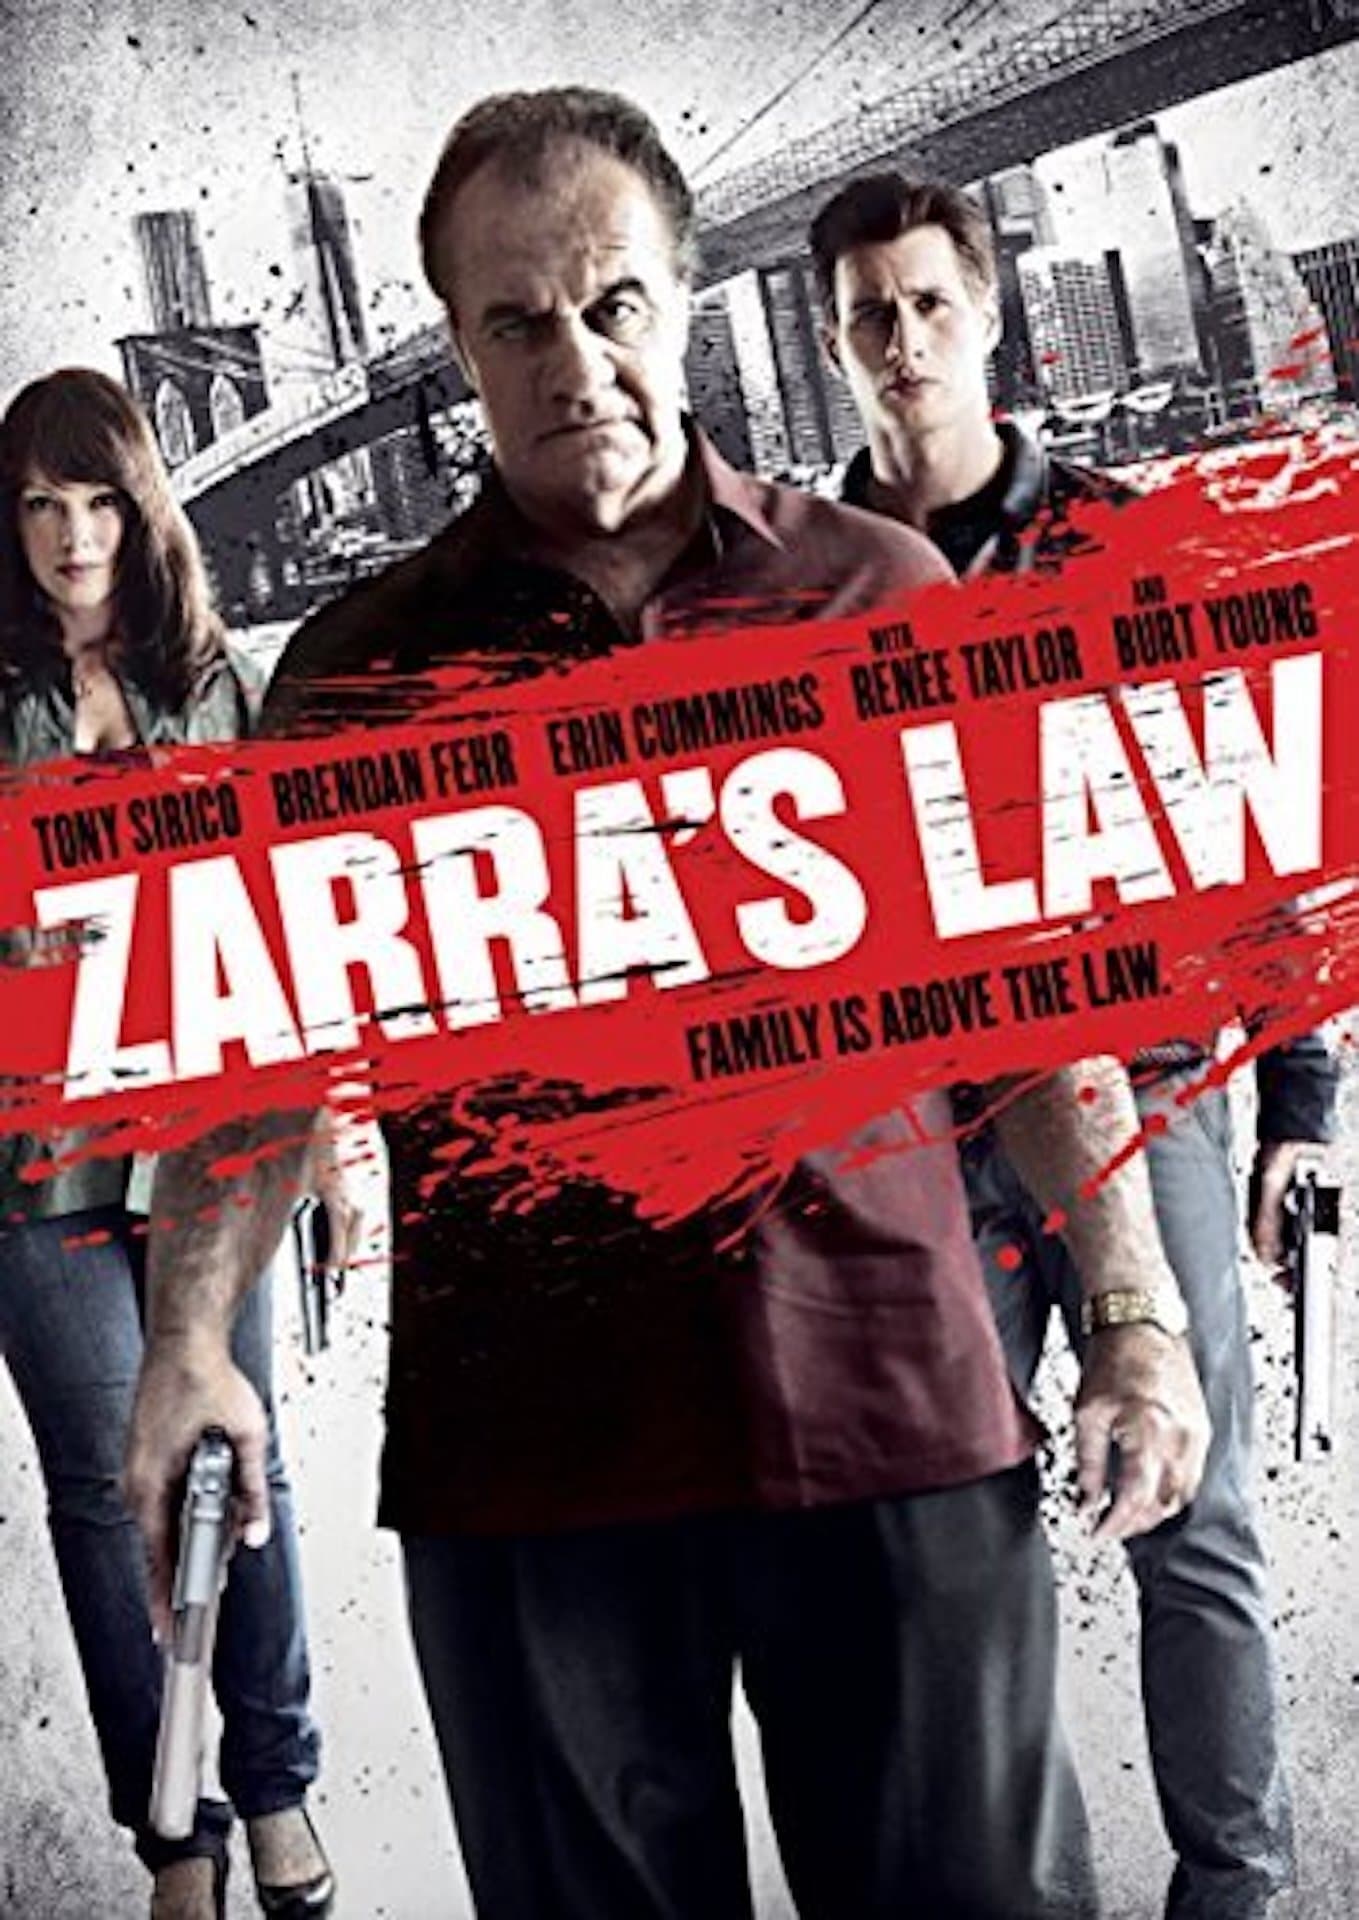 Zarra's Law